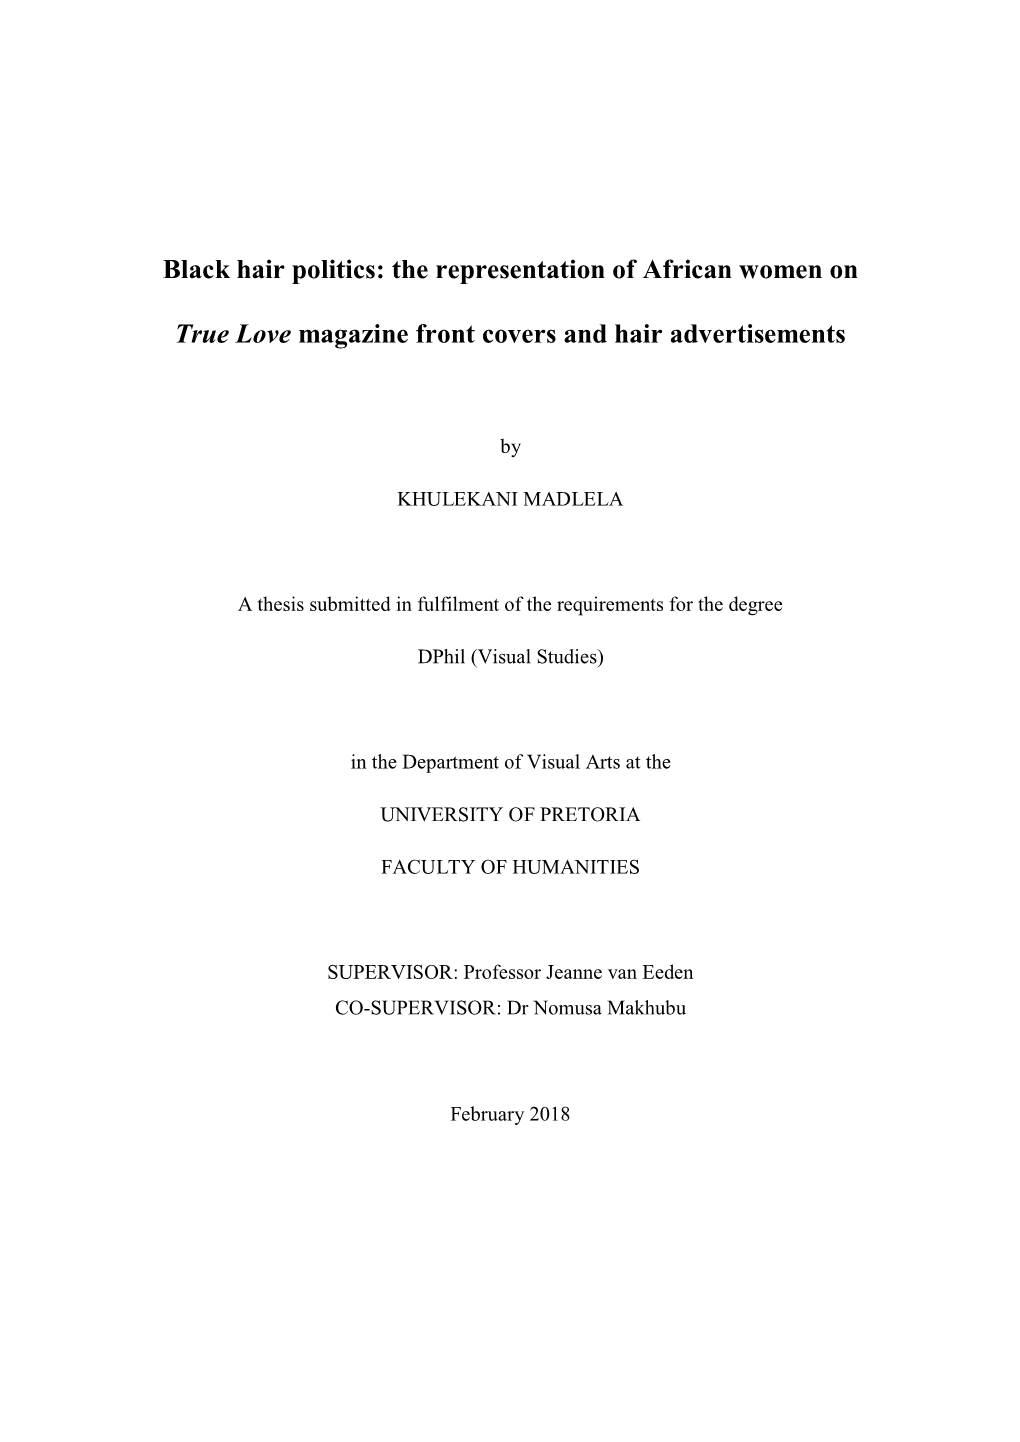 Black Hair Politics: the Representation of African Women On